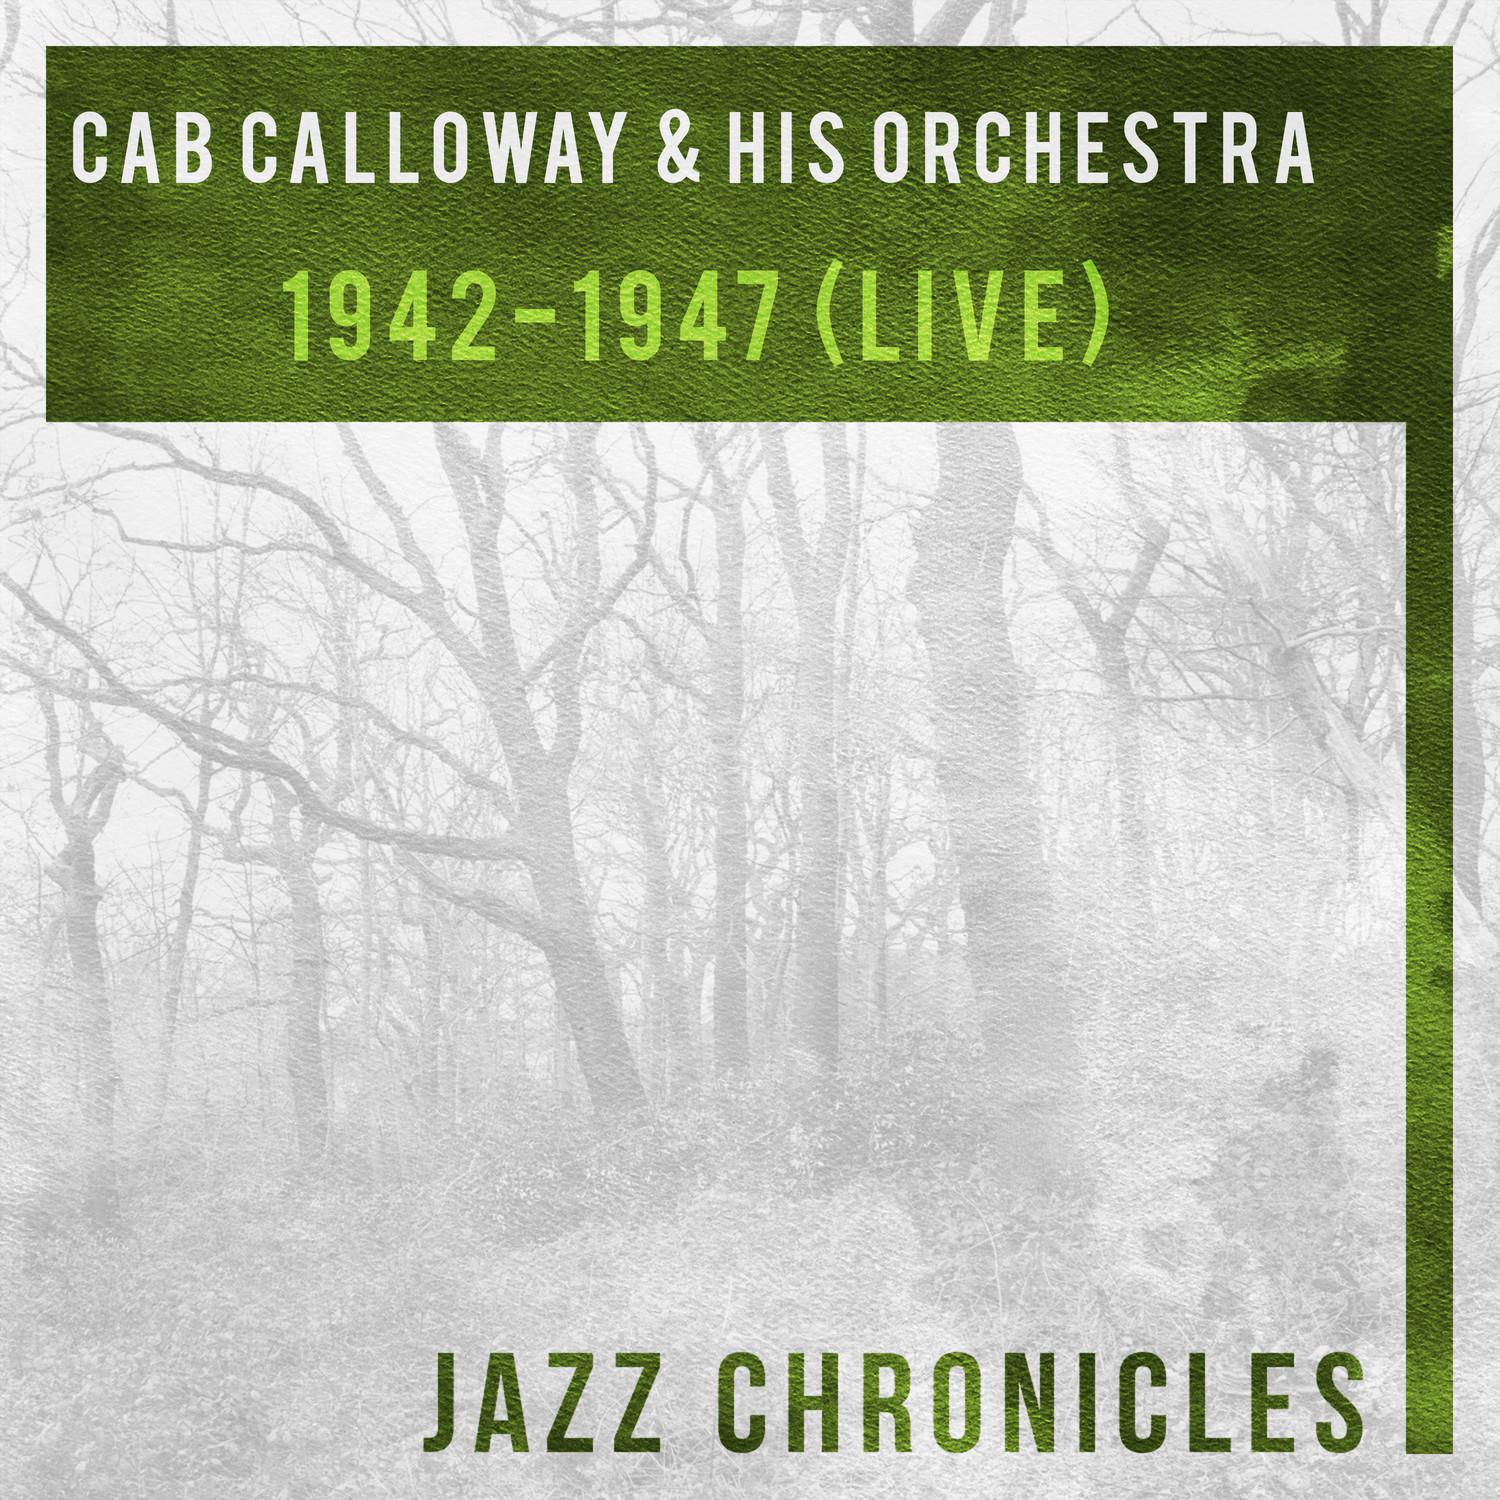 1942-1947 (Live)